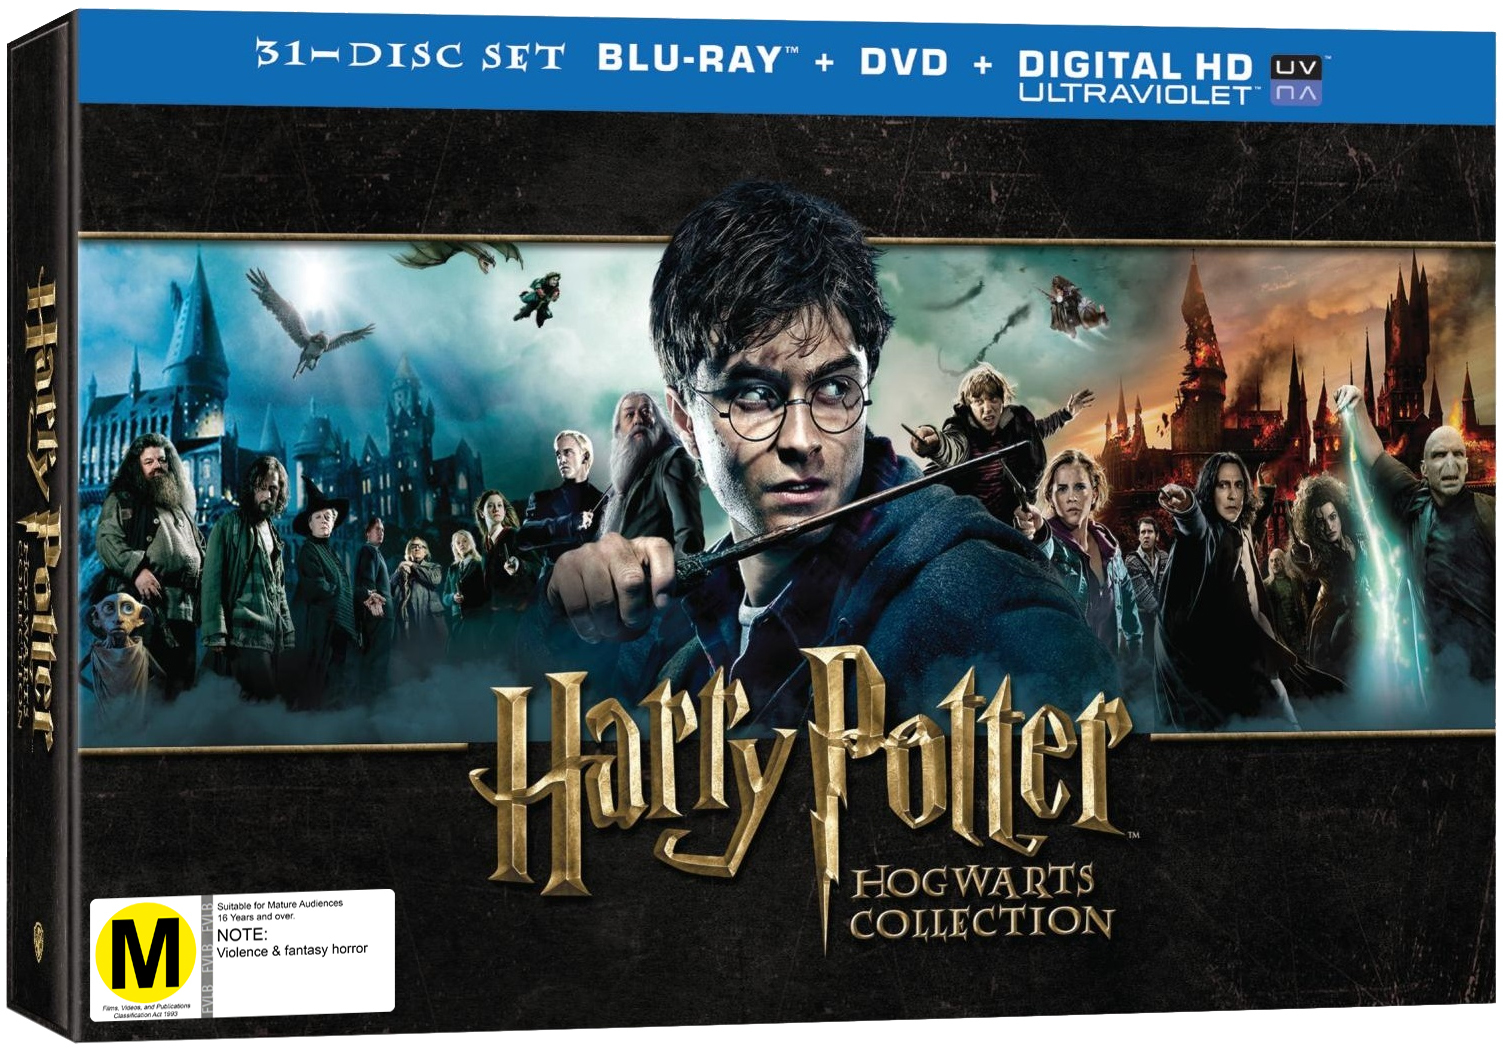 harry potter blu ray box set review